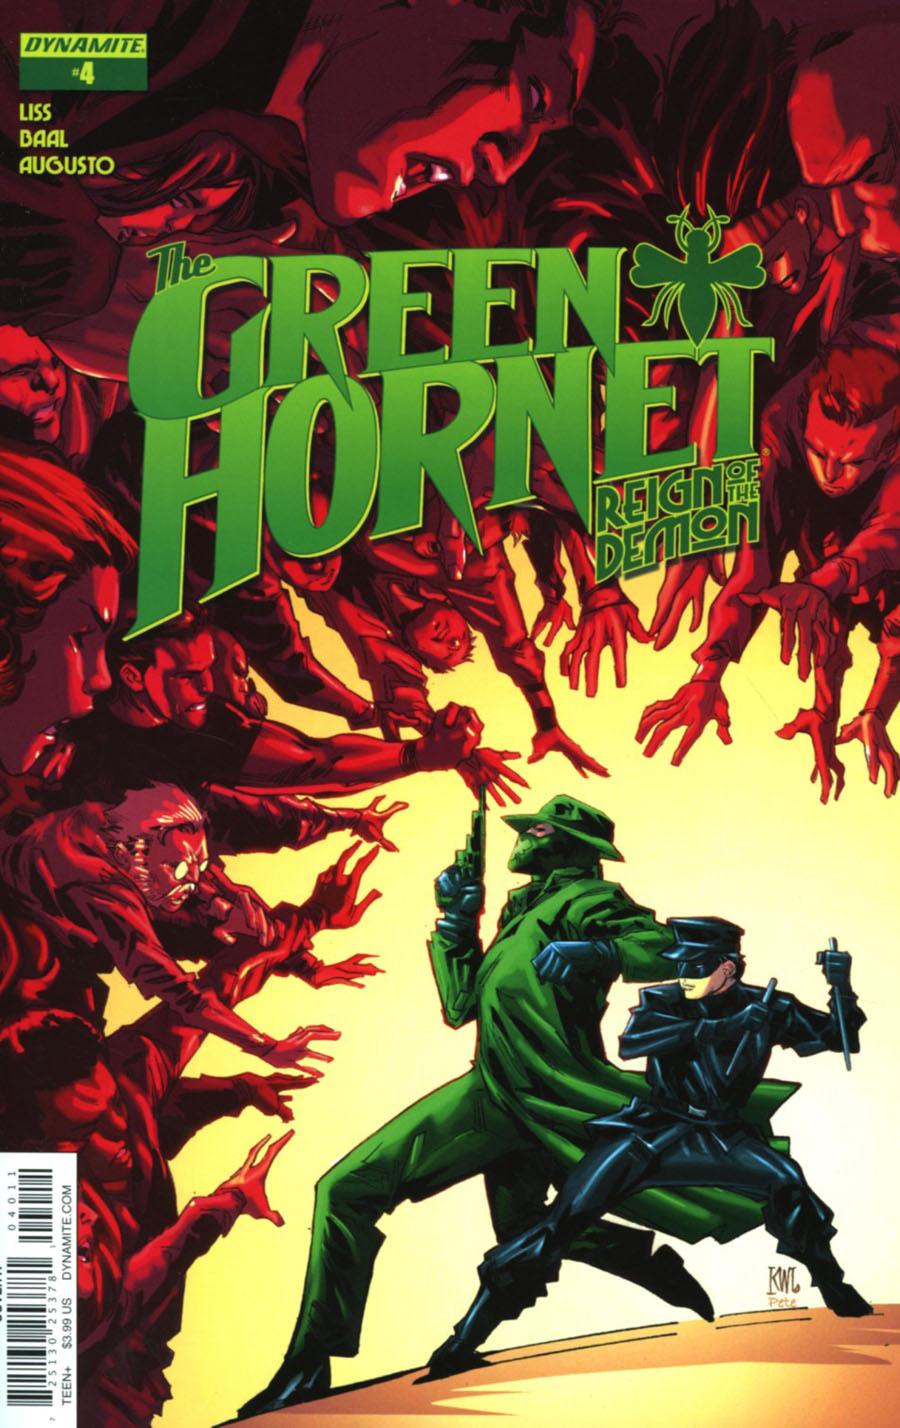 Green Hornet Reign Of The Demon Vol. 1 #4